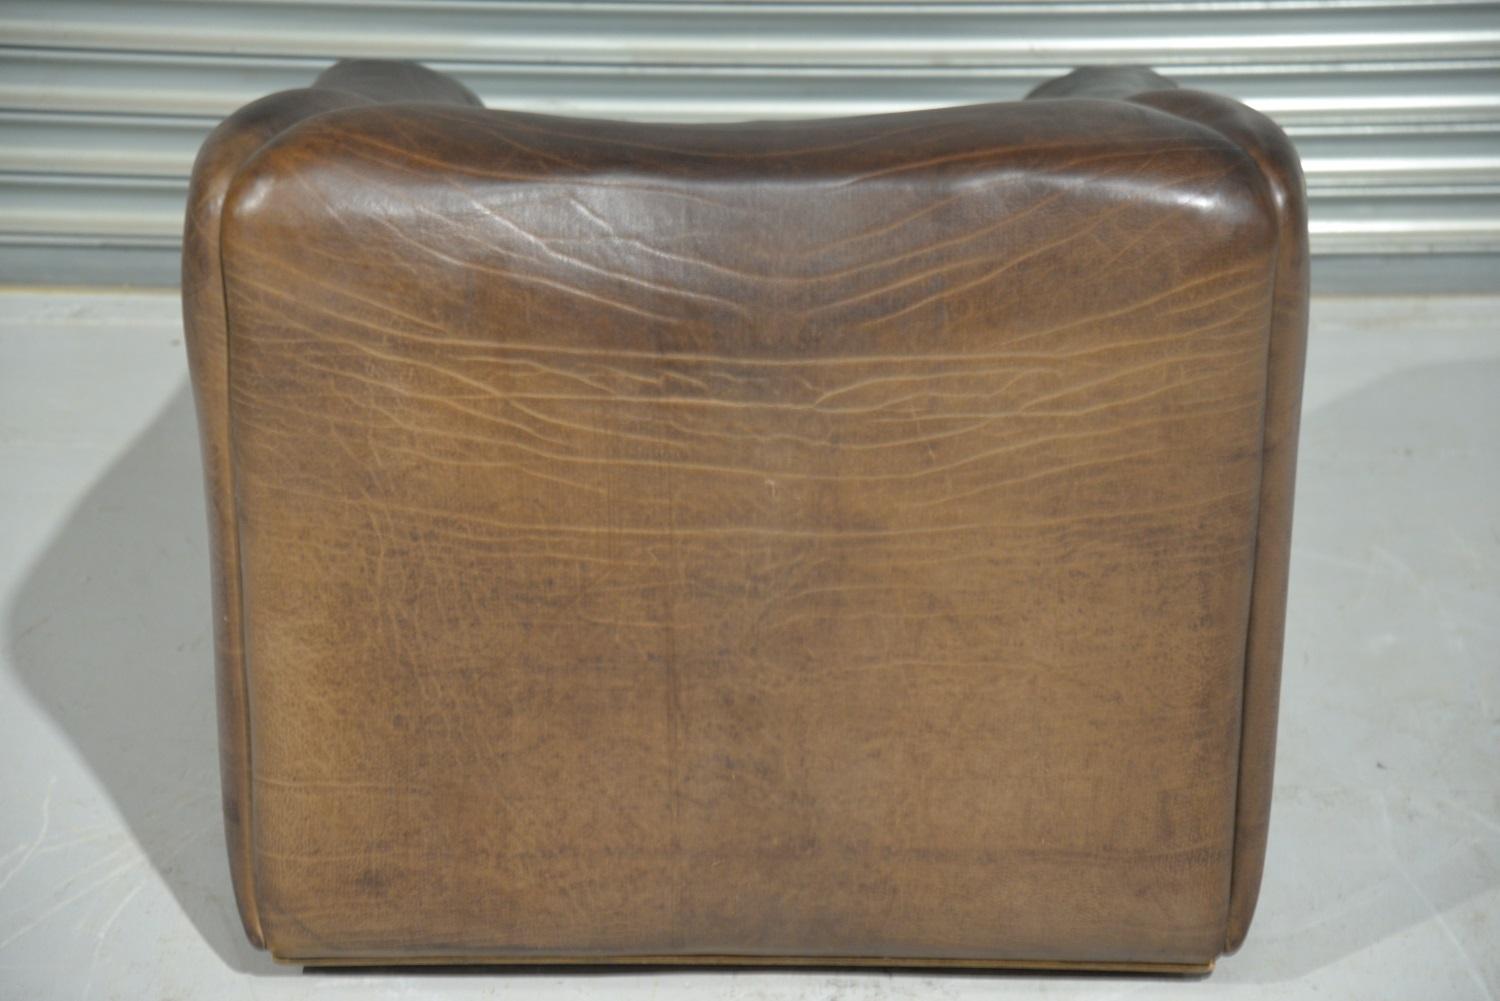 Late 20th Century Vintage De Sede DS 47 Leather Armchair, Switzerland, 1970s For Sale